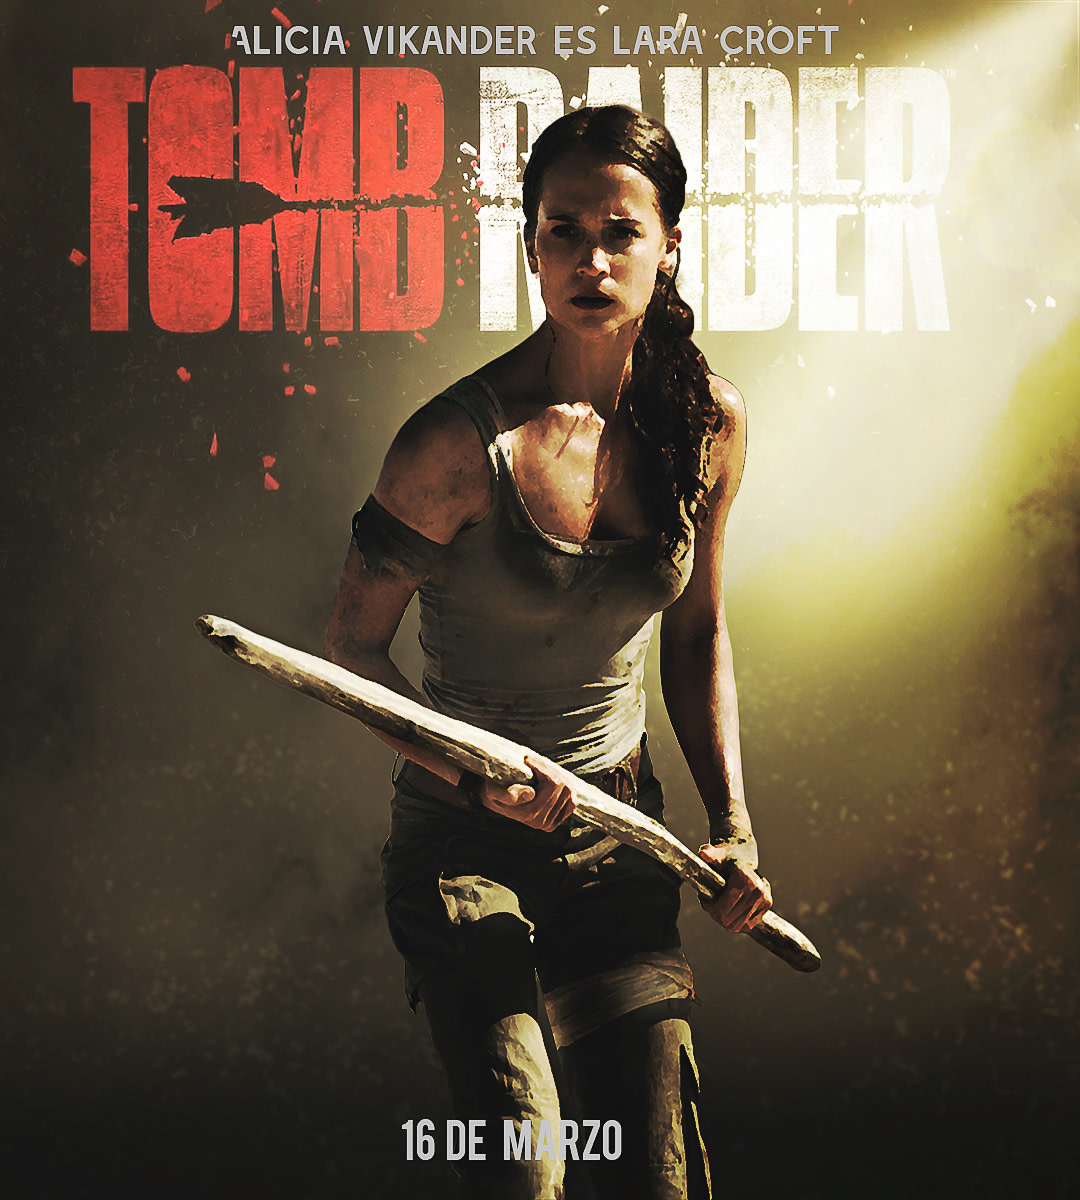 tomb raider movie poster